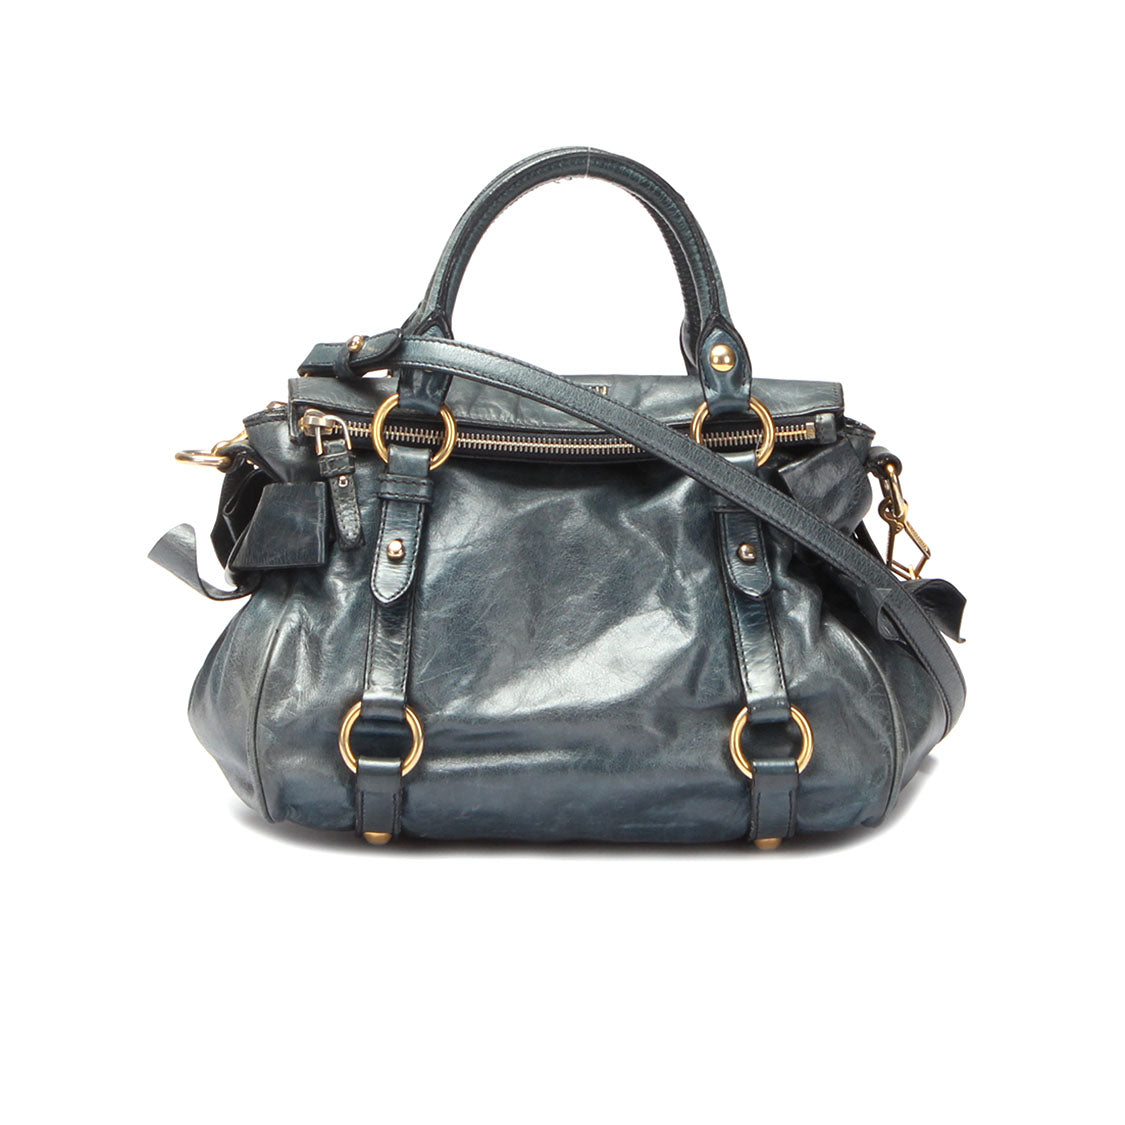 Miu Miu Vitello Lux Bow Satchel Leather Handbag in Good condition